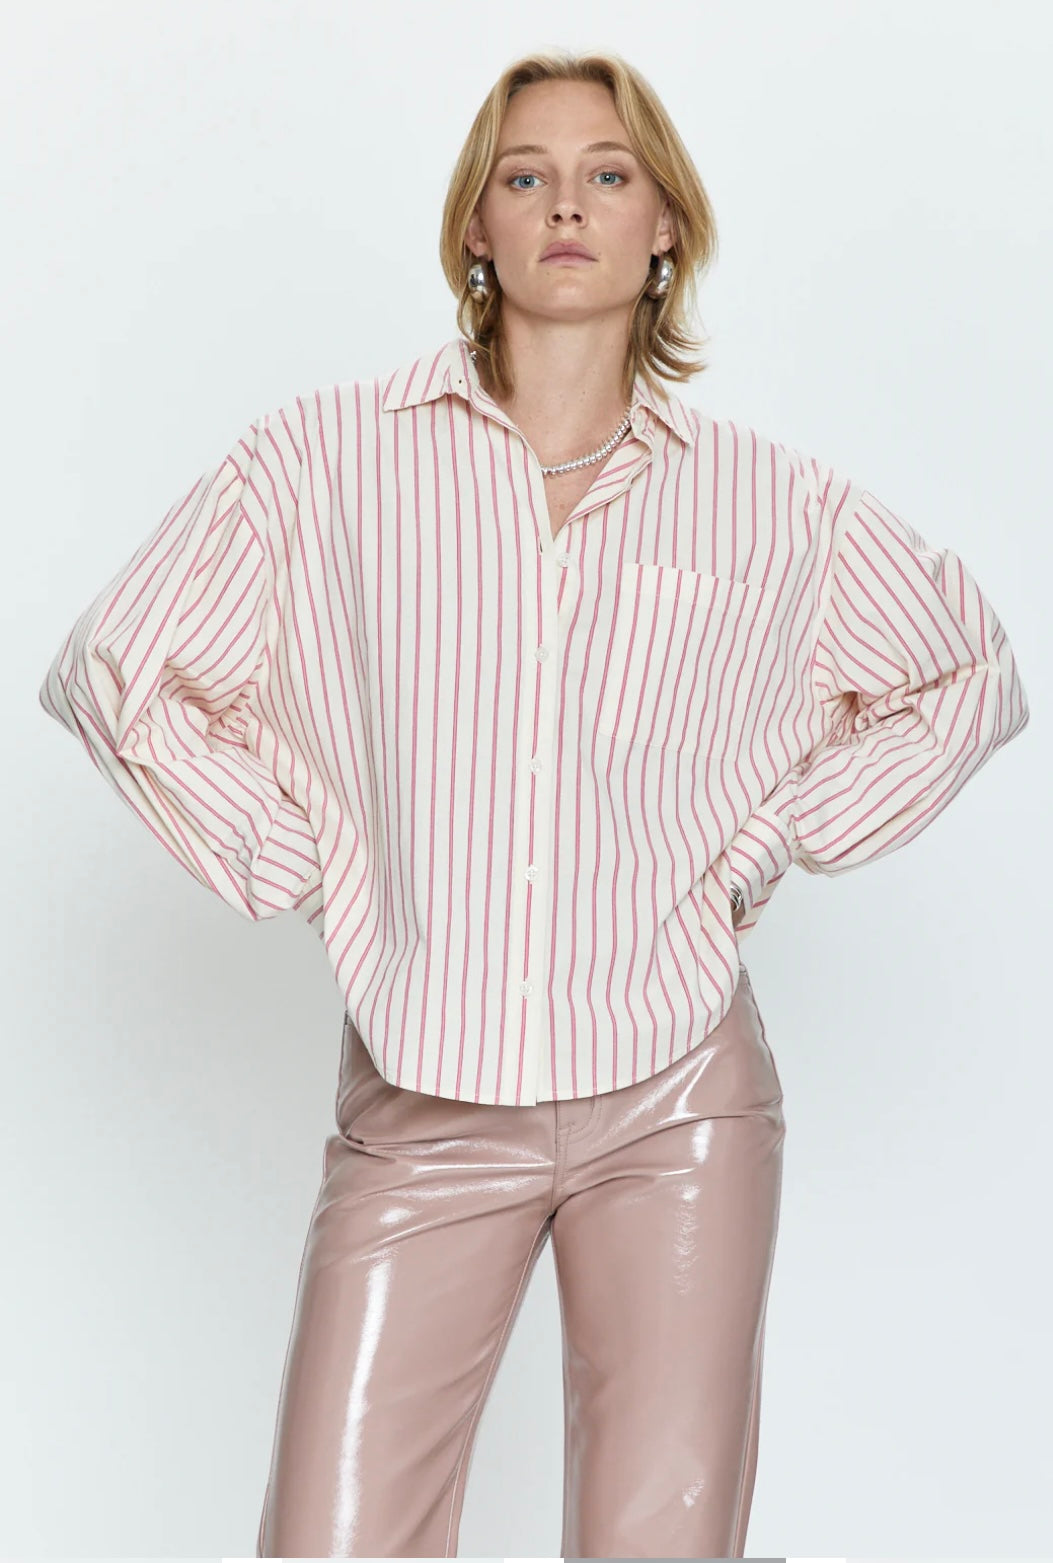 Sloane Oversized Button Down Shirt